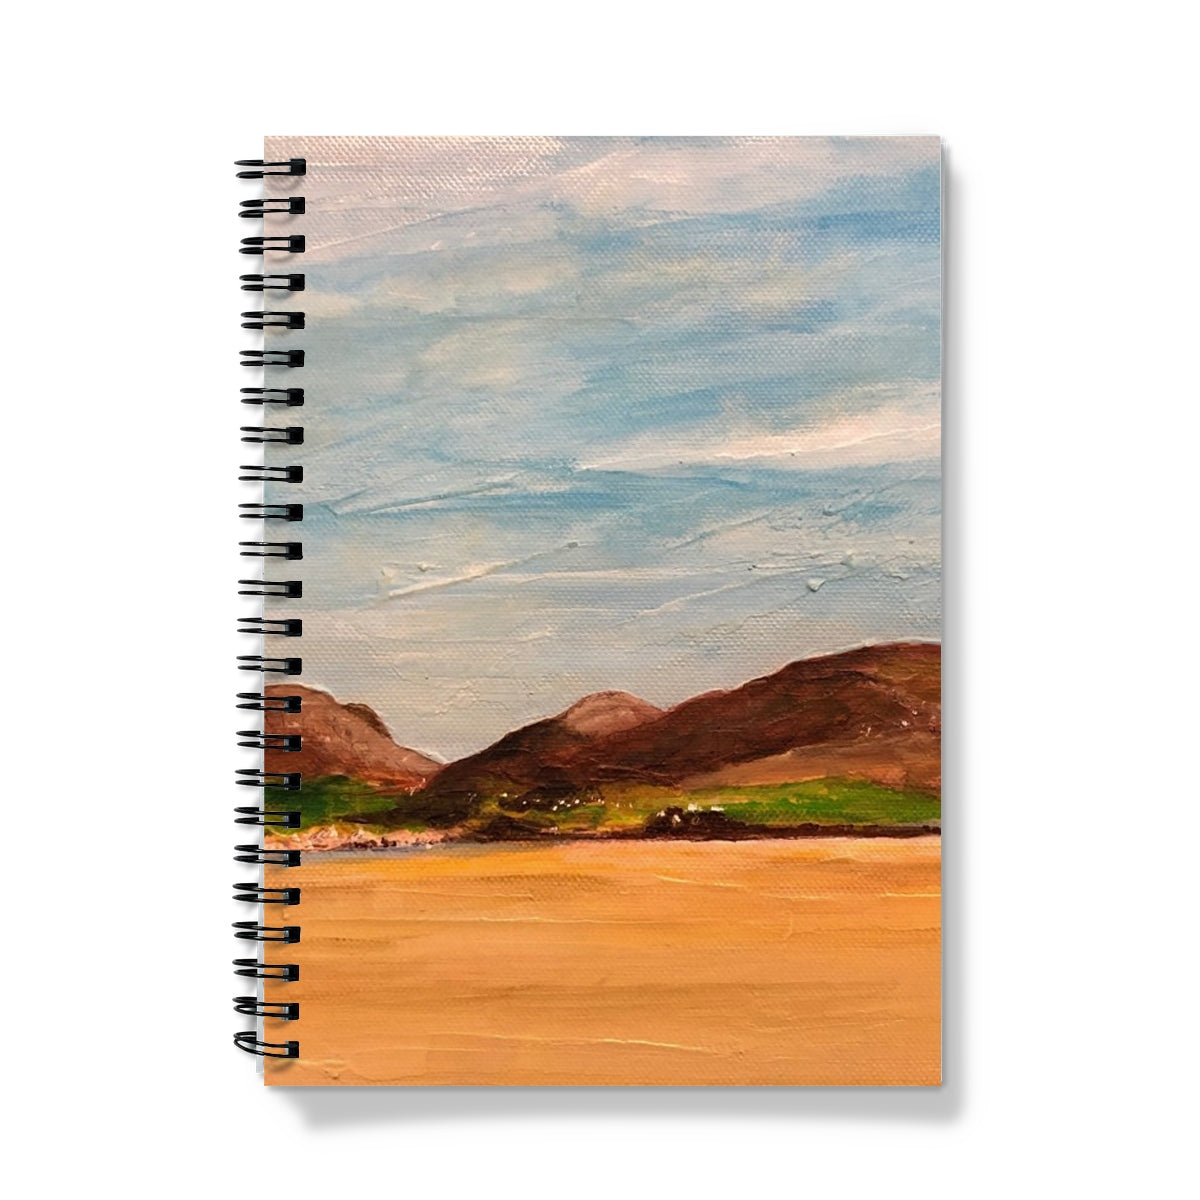 Uig Sands Lewis Art Gifts Notebook-Journals & Notebooks-Hebridean Islands Art Gallery-A4-Graph-Paintings, Prints, Homeware, Art Gifts From Scotland By Scottish Artist Kevin Hunter